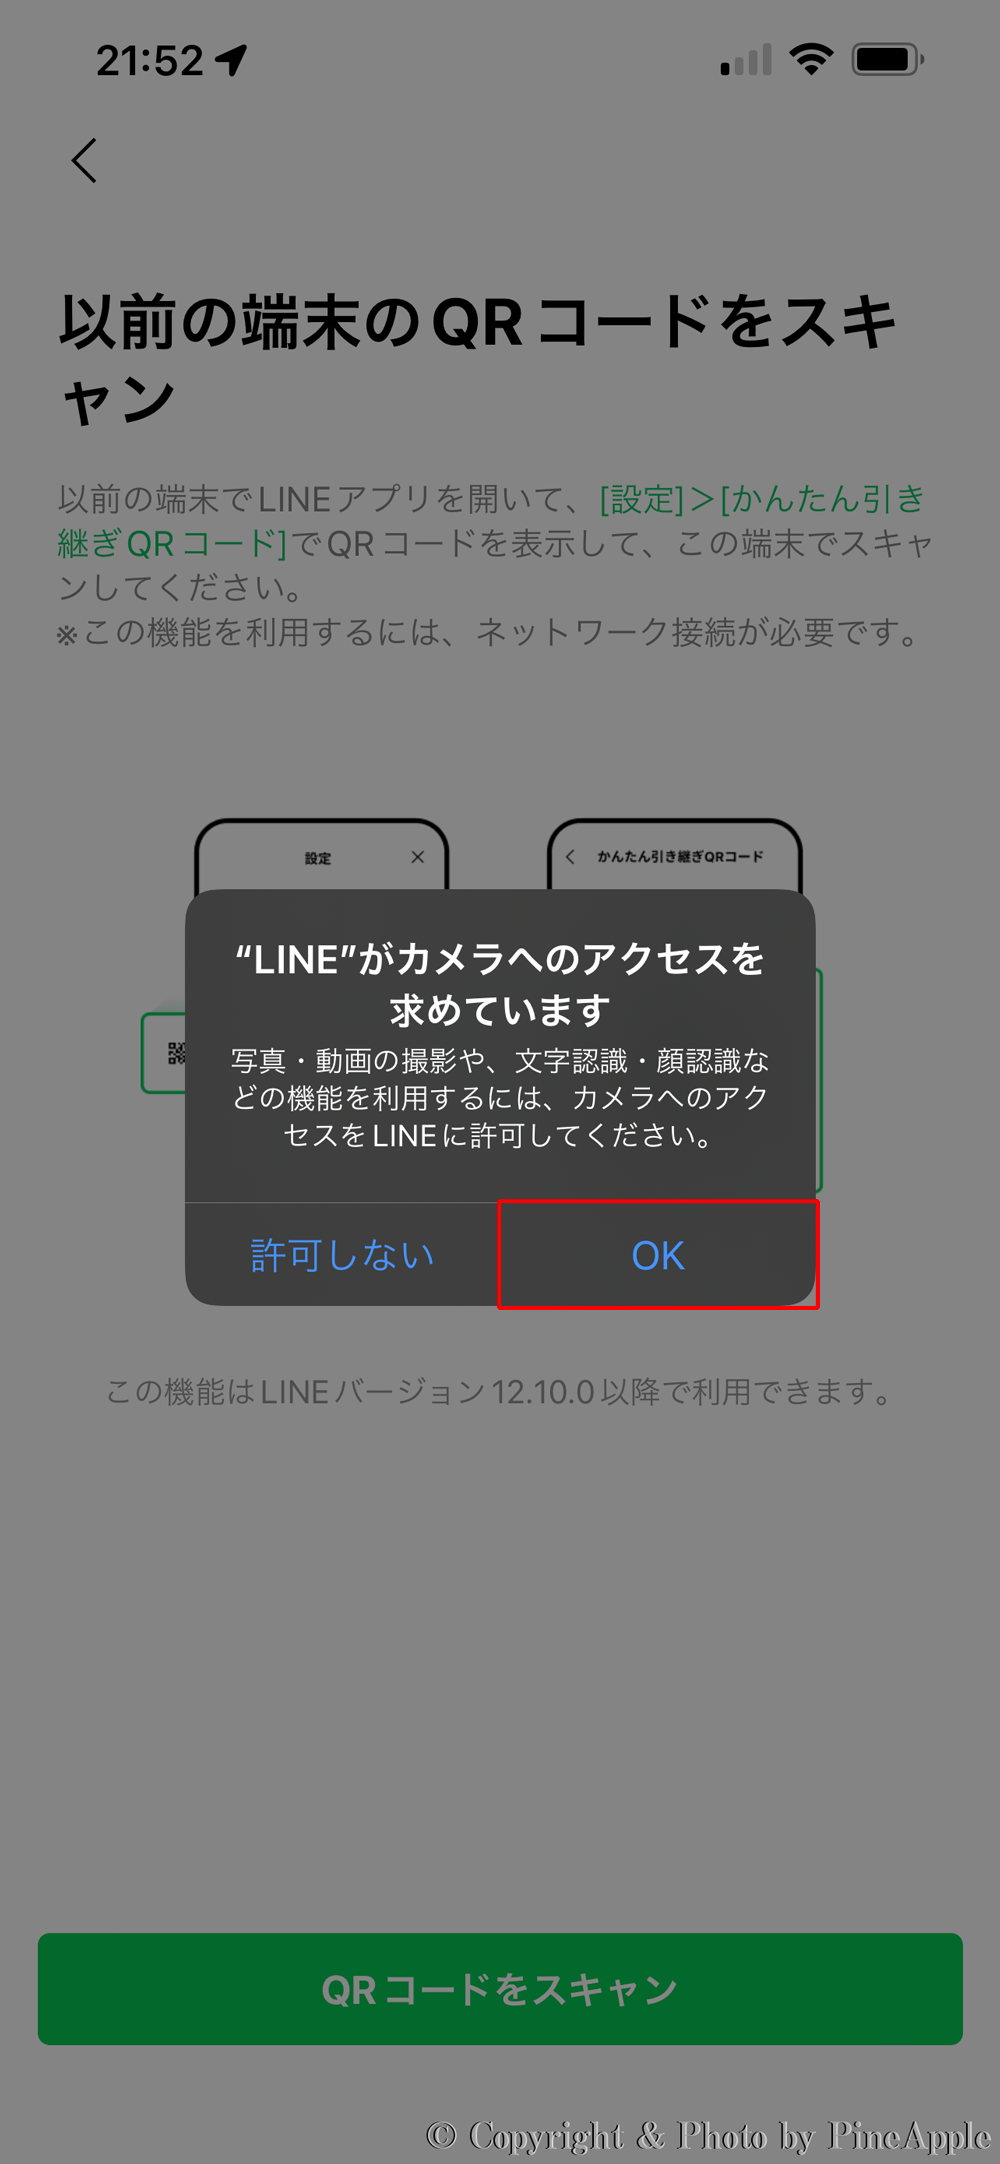 LINE：""LINE" がカメラへのアクセスを求めています" のポップアップが表示されたら、[OK] をタップ